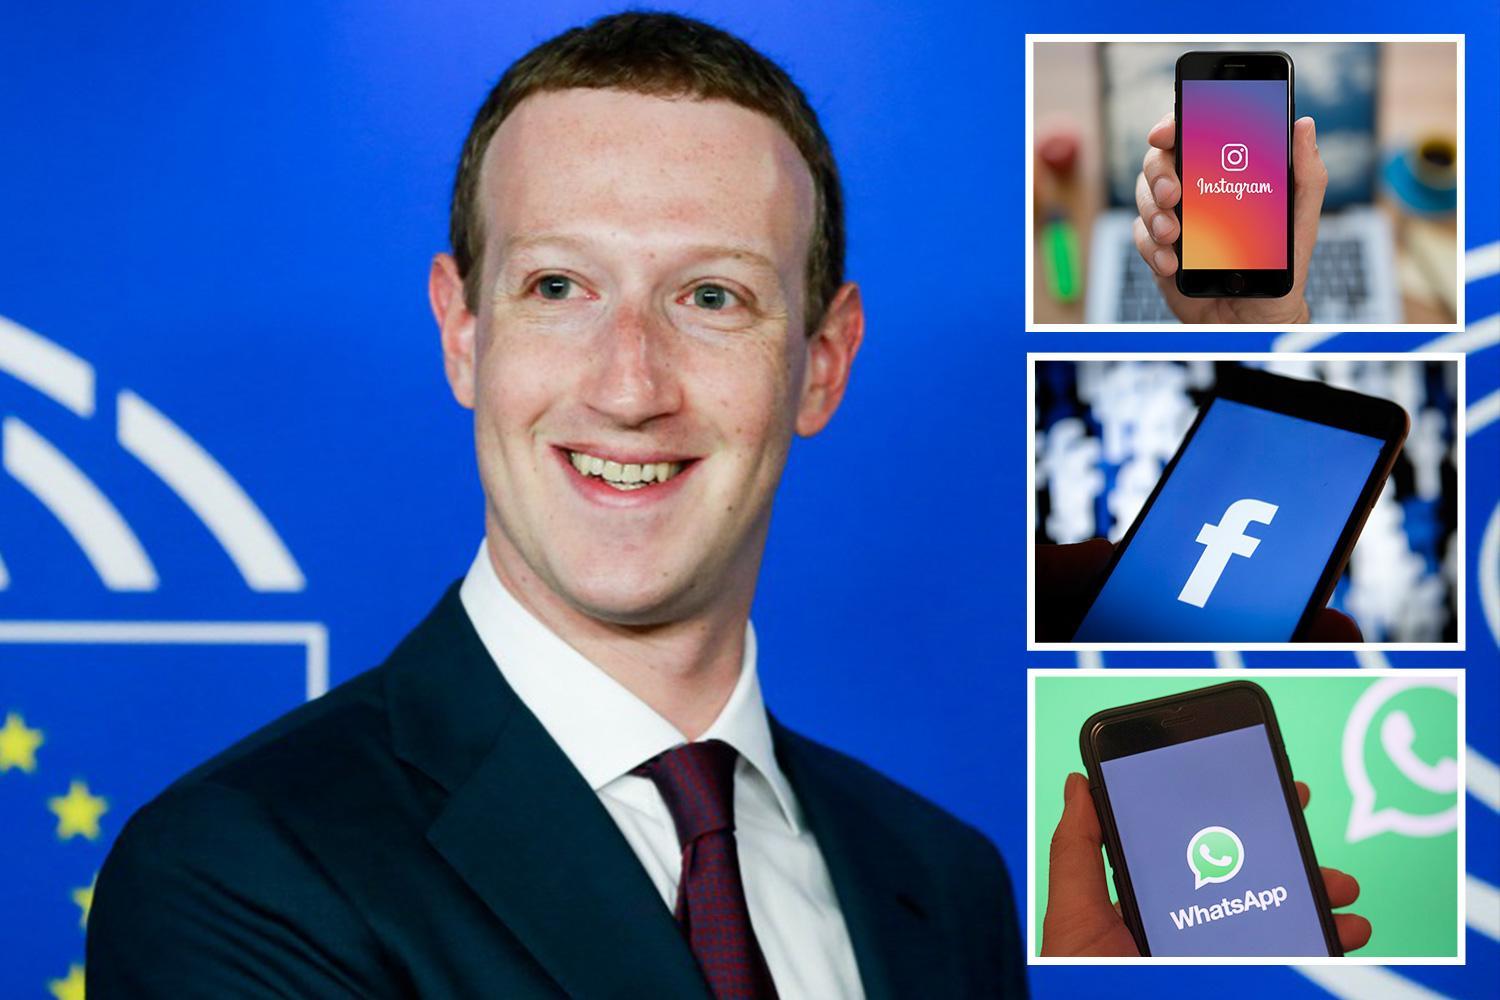  Zuckerberg berlari Facebook, Instagram dan WhatsApp - digunakan oleh miliaran orang di seluruh dunia